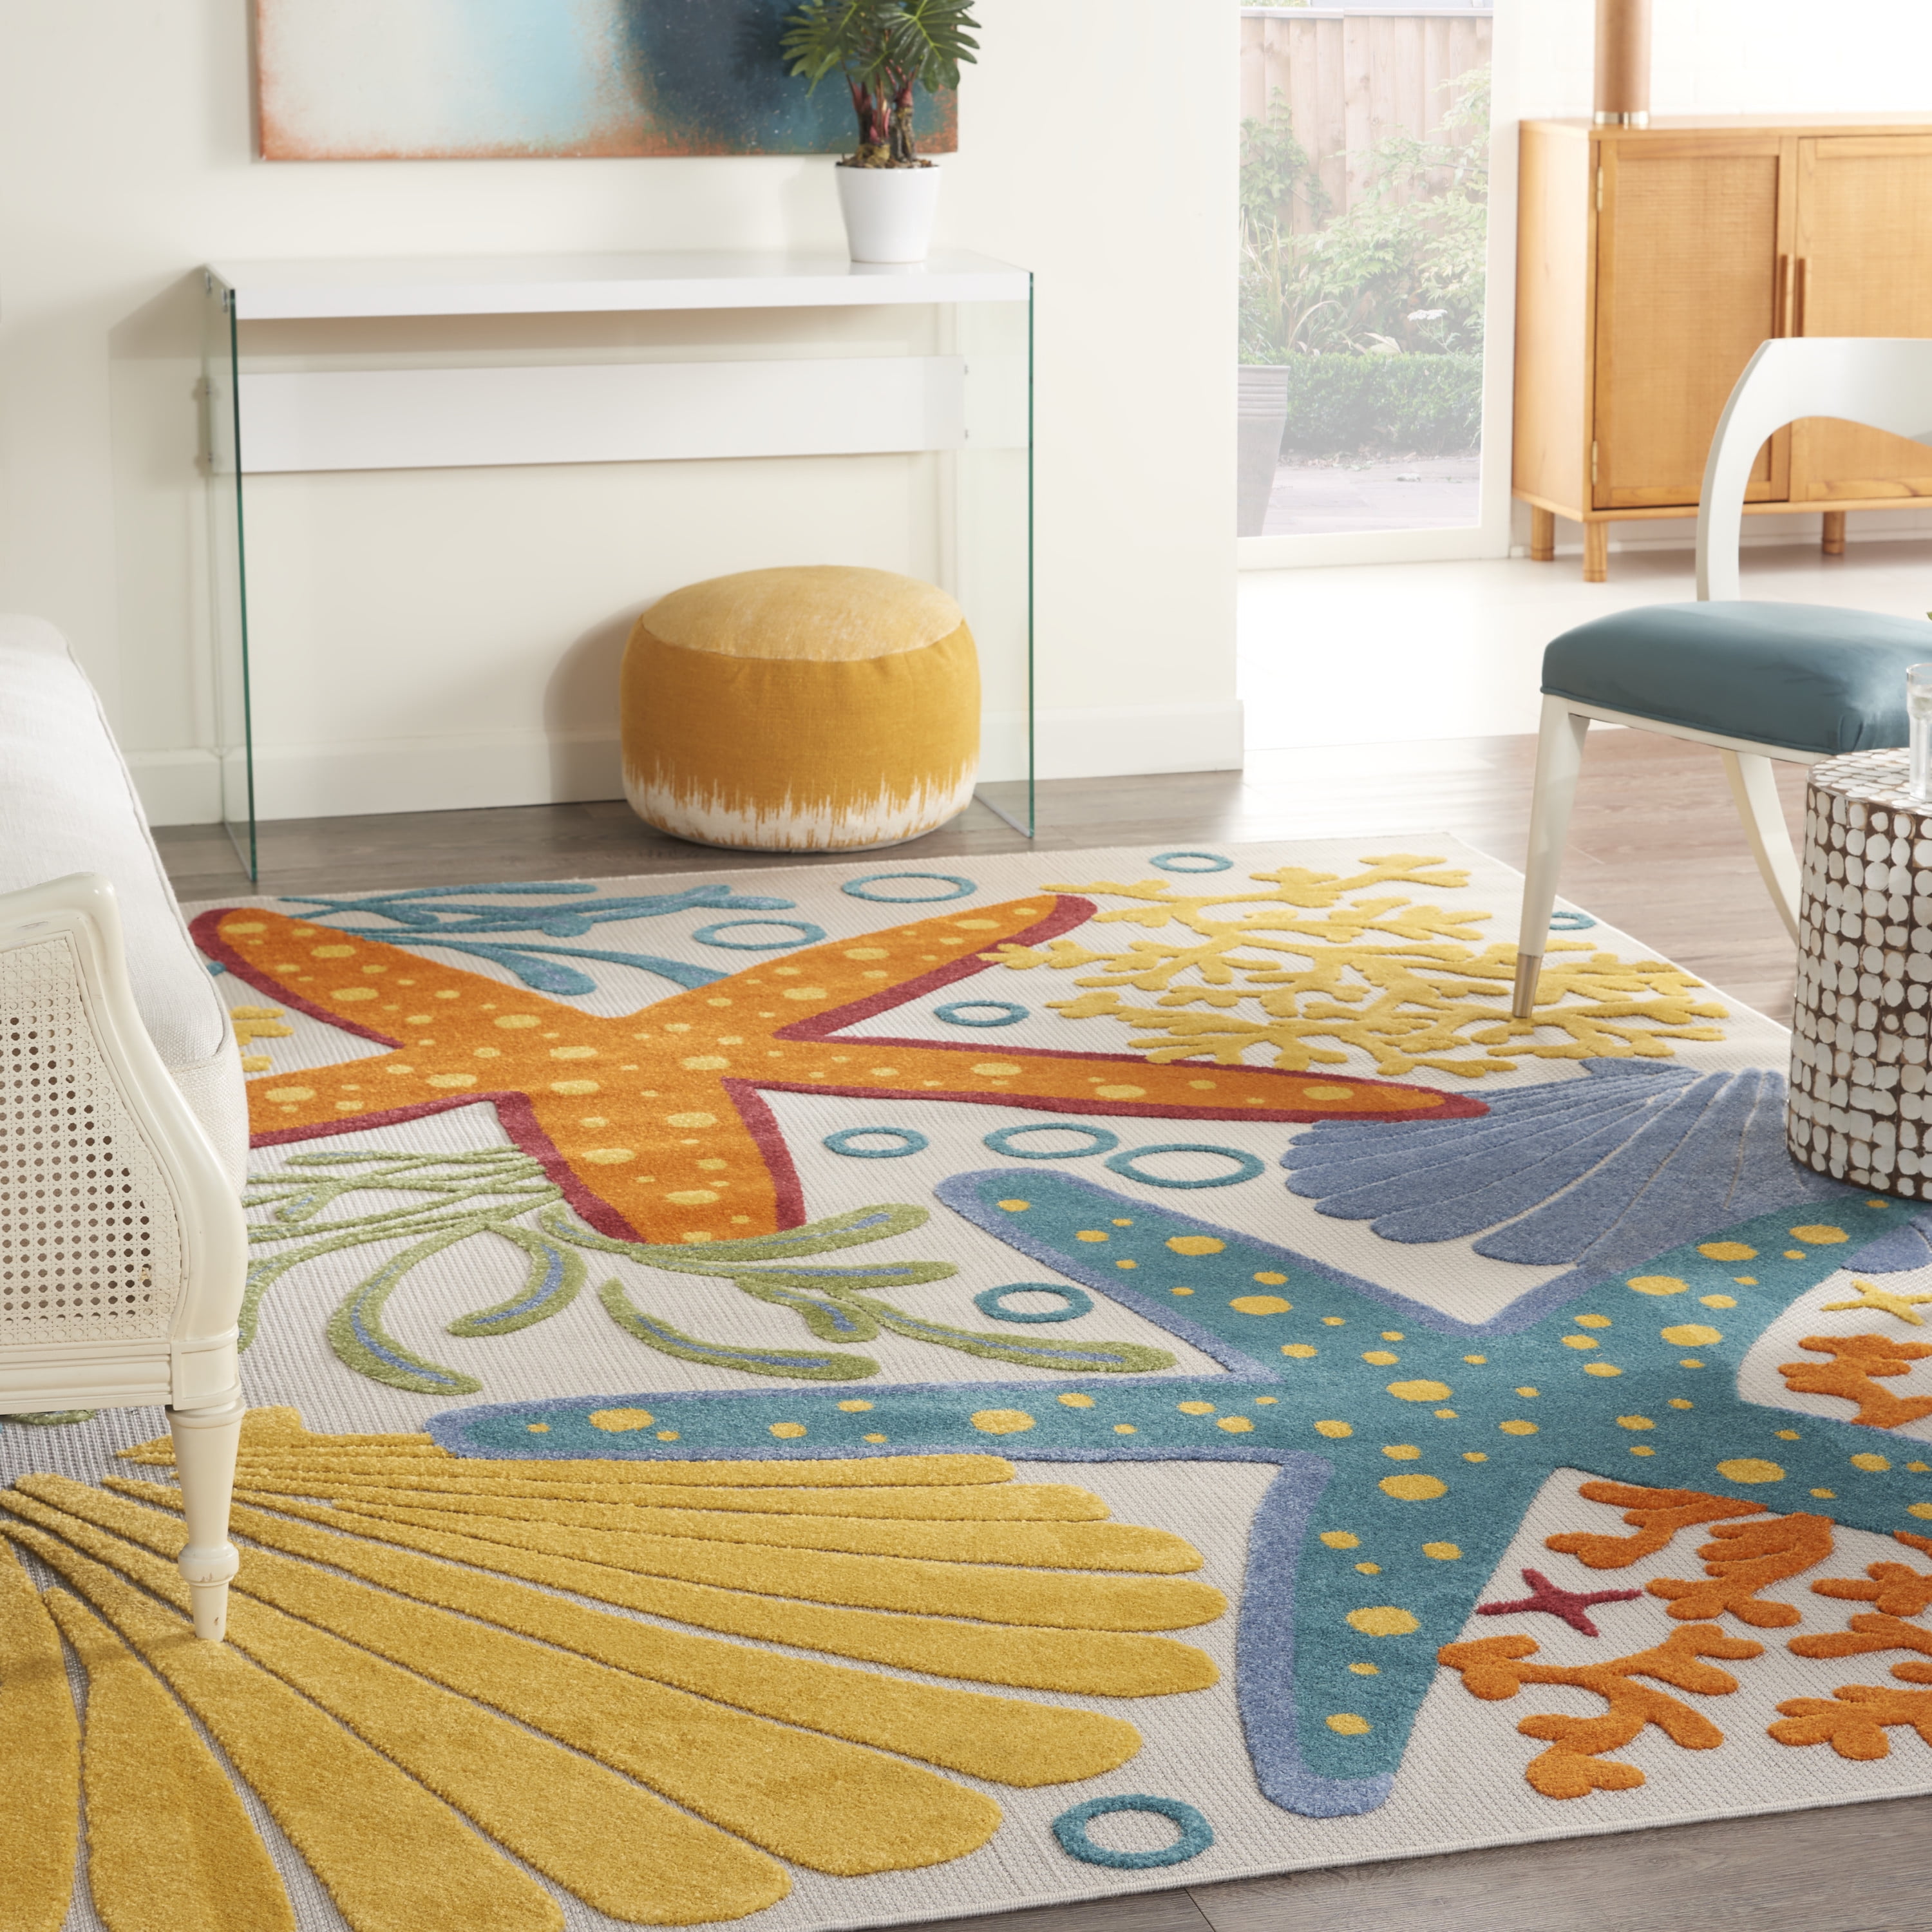 Sunny Green Tropical Jungle Yoga Carpet Floor Mat Living Room Home Area Rugs 